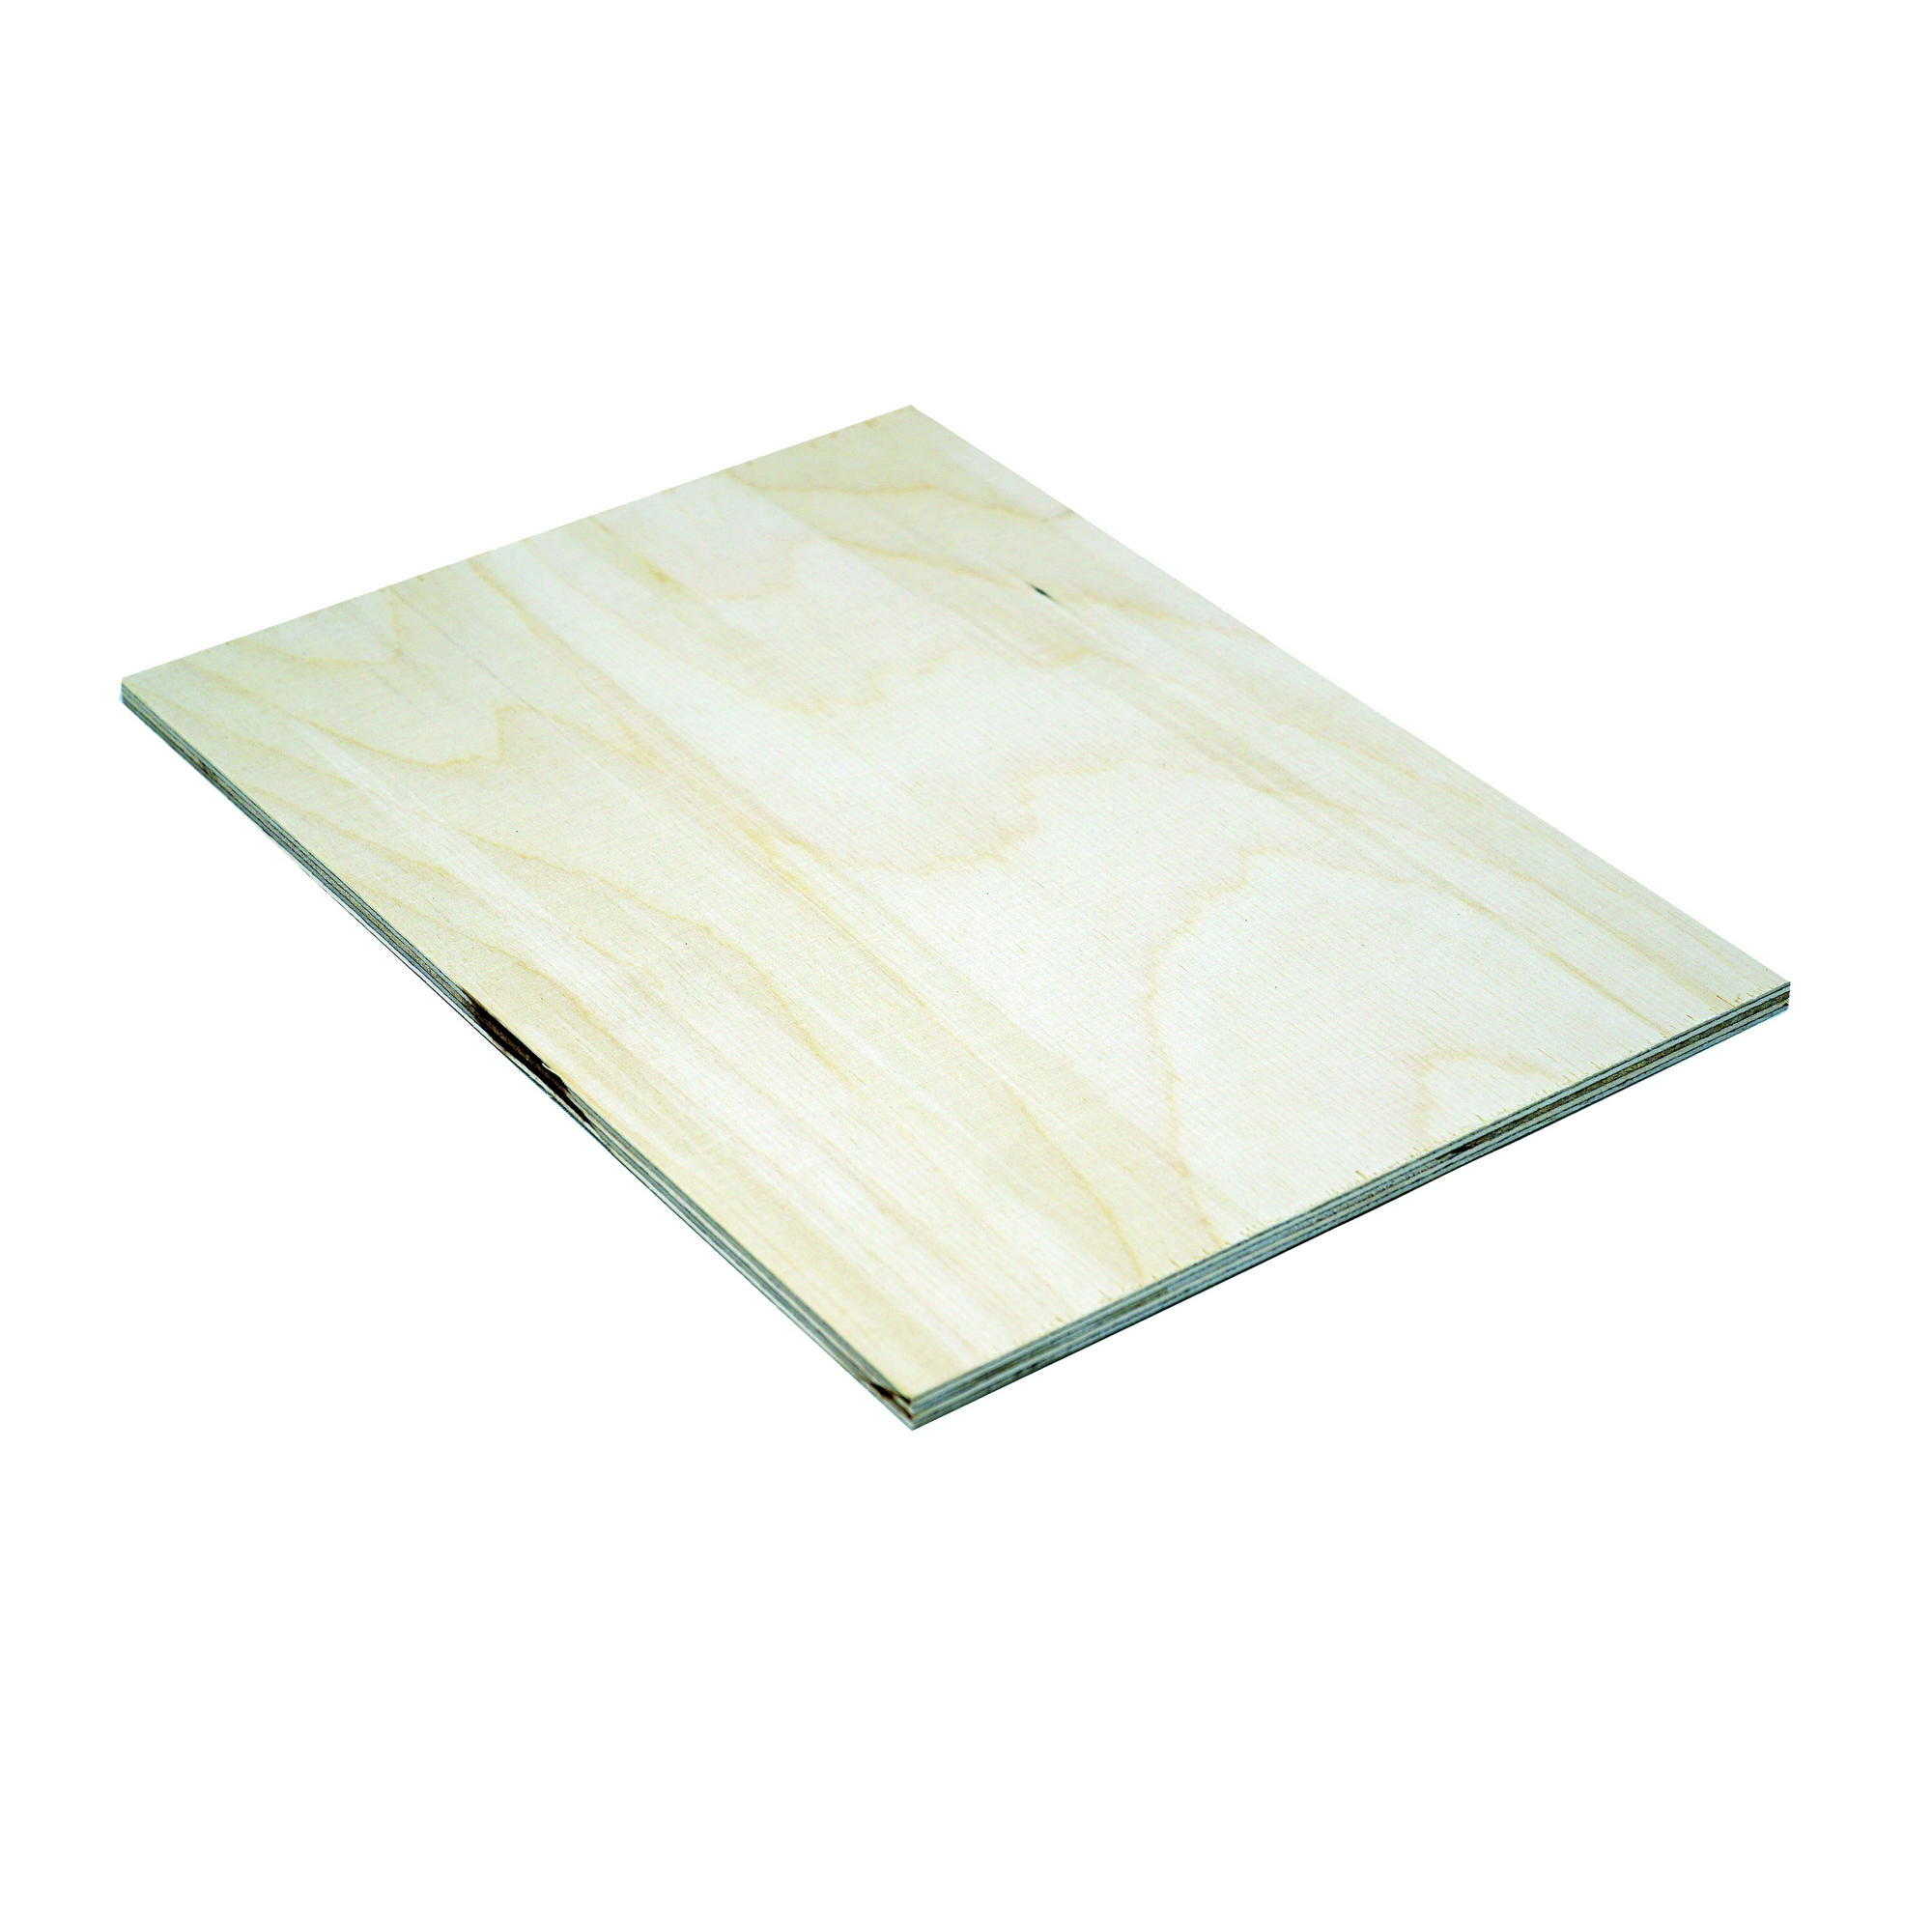 3 Platten Sperrholz Multiplex Birke 3 mm 76 x 50 cm Holzplatte 8,9€/m² 